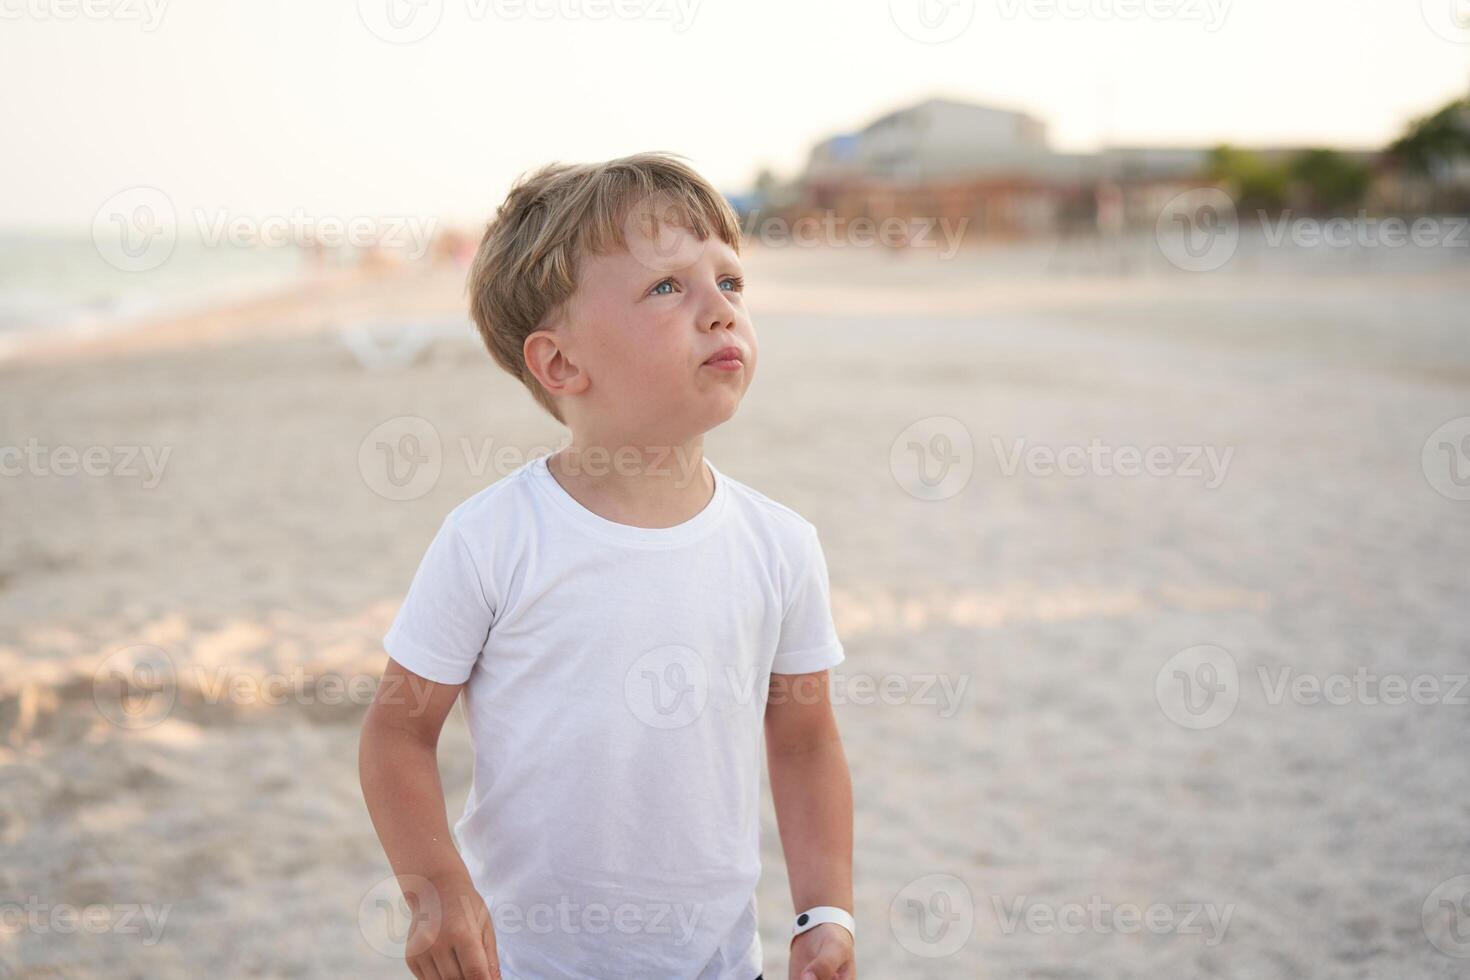 Caucasian boy standing beach. Childhood summertime. Family vacation photo